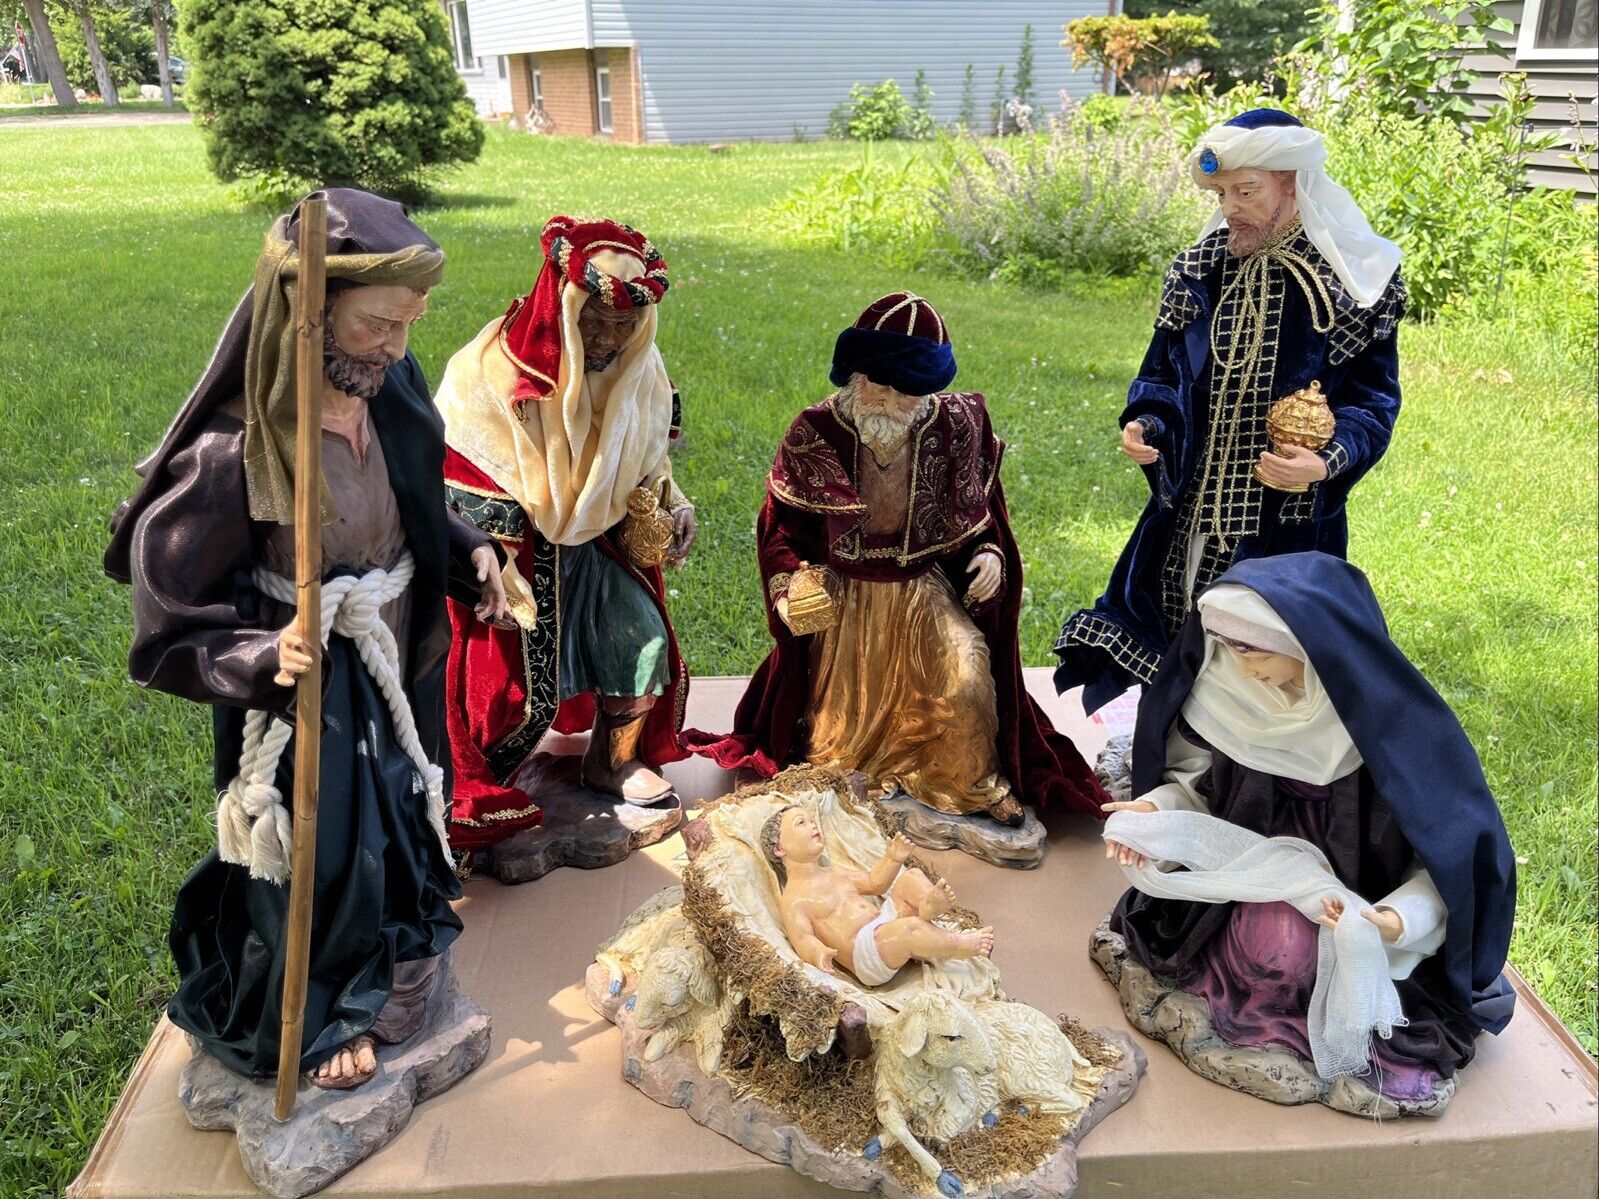 Festivities By Enesco Large Nativity Set Fabric Mary Joseph Jesus 3 Kings 21”